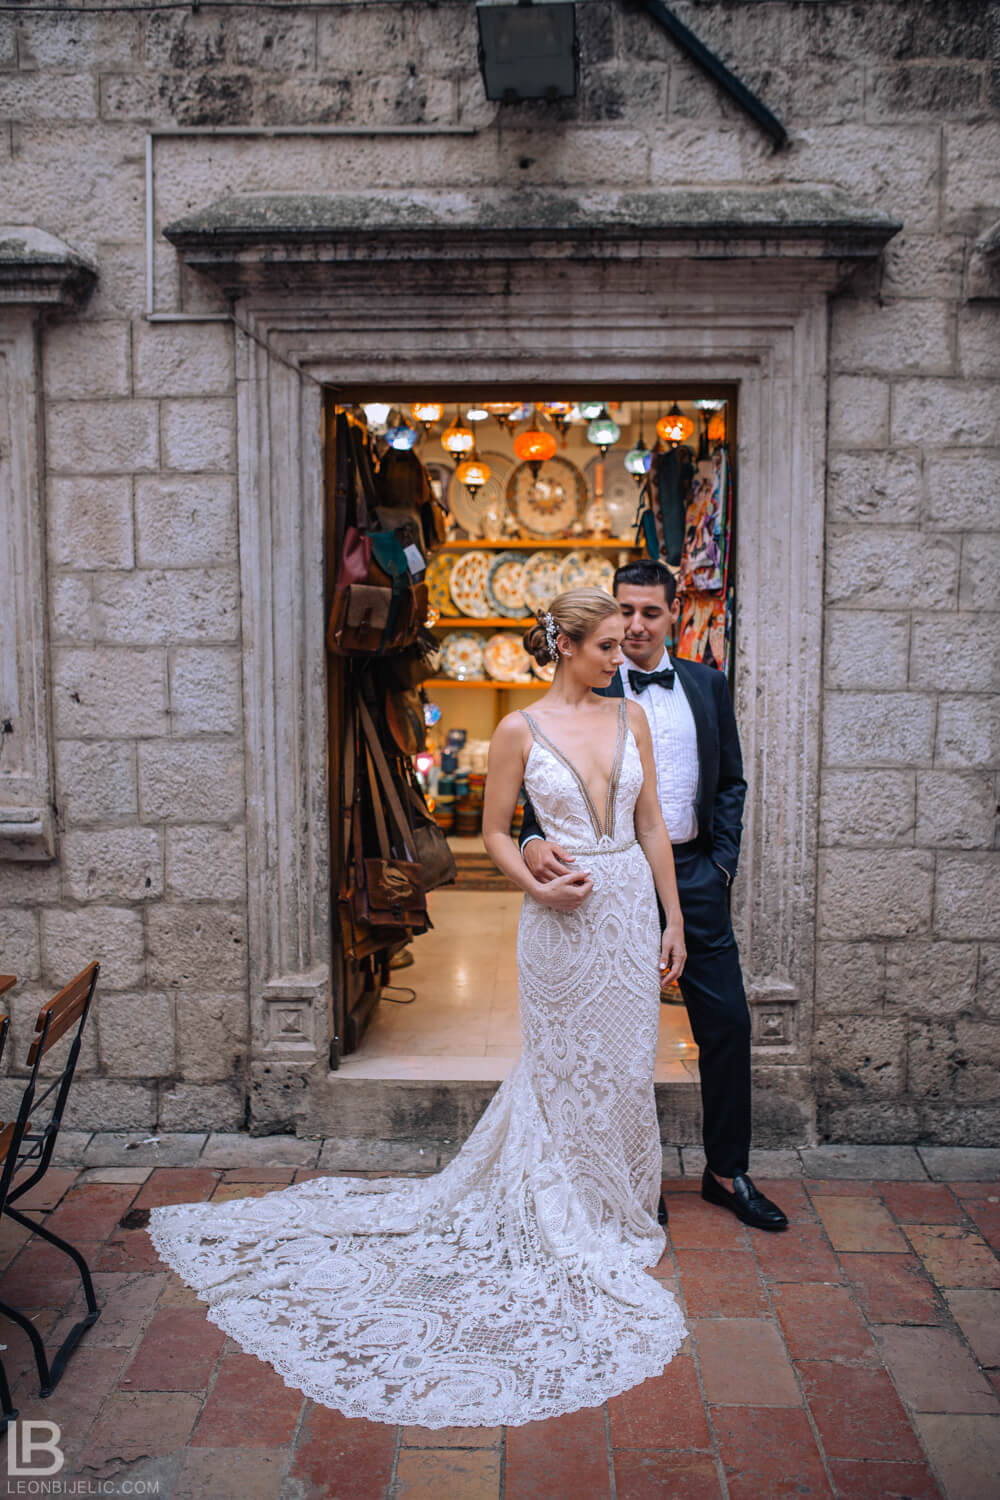 KOTOR WEDDING PHOTOGRAPHER - HOTEL CATTARO - LEON BIJELIC PHOTOS PHOTO PHOTOGRPAHY - MONTENEGRO - WEDDING - COUPLE - IDEAS - PORTRAITS PORTRAIT